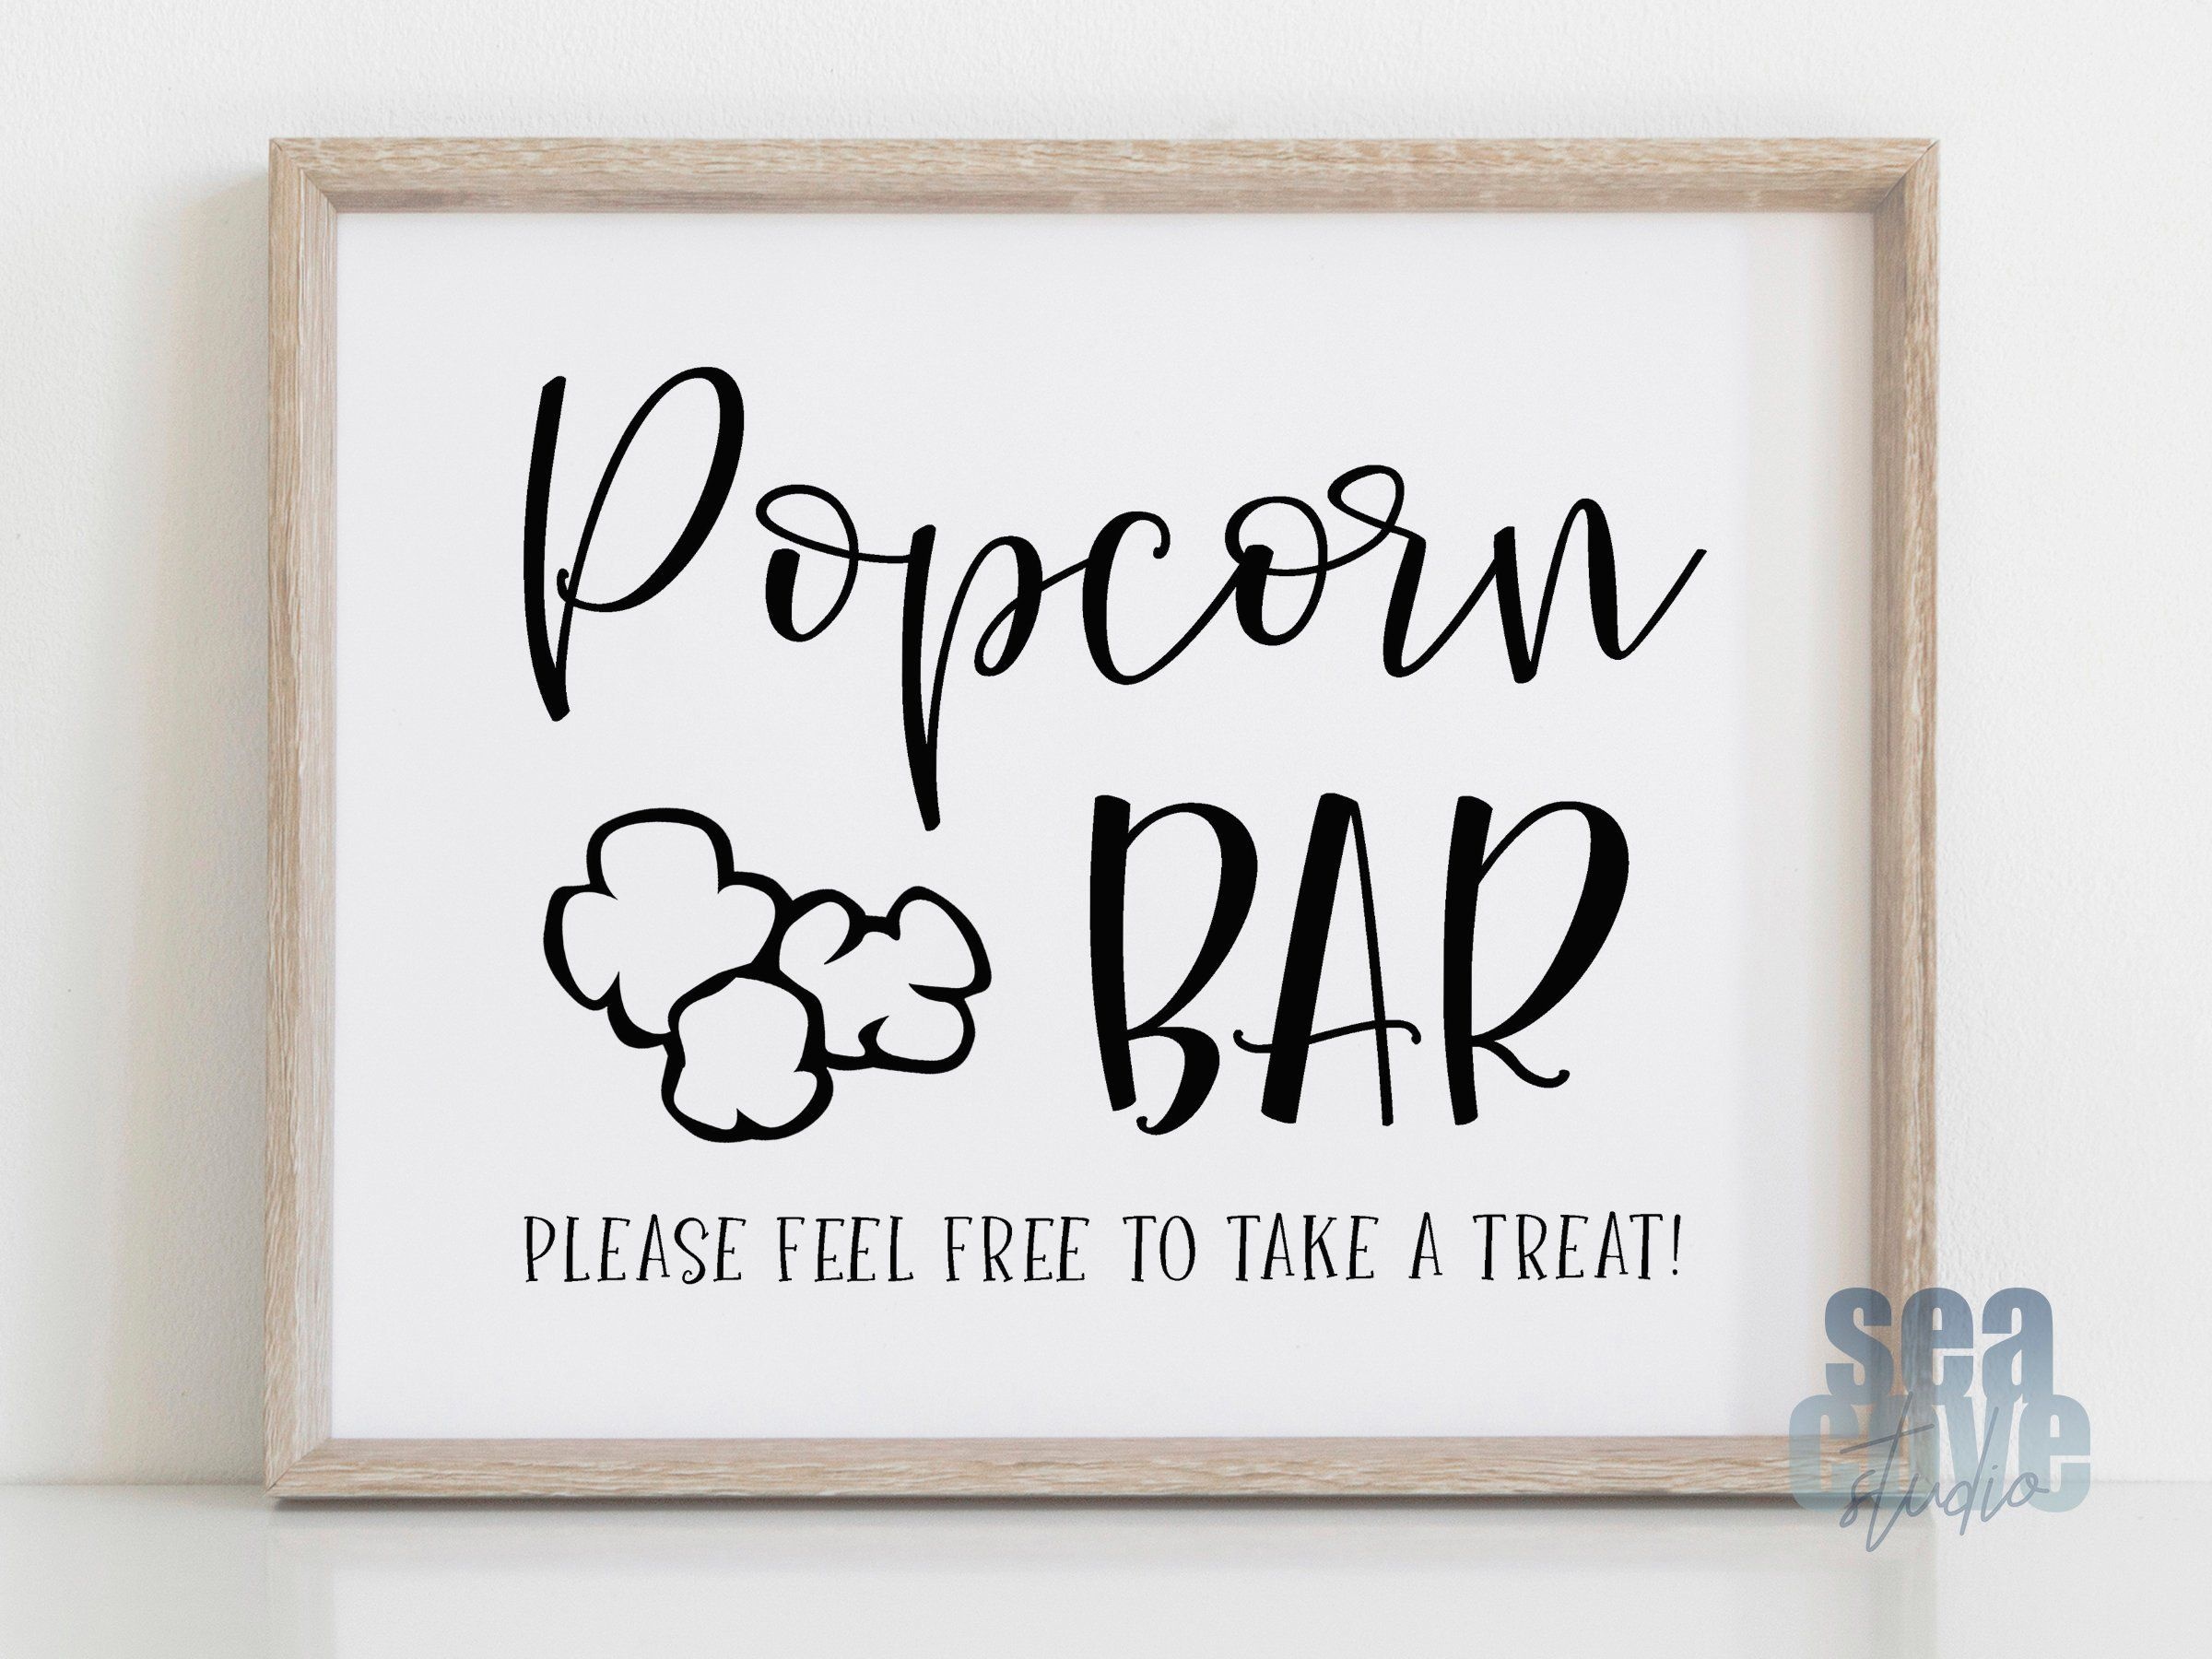 Popcorn Bar Free Printables Printable Word Searches